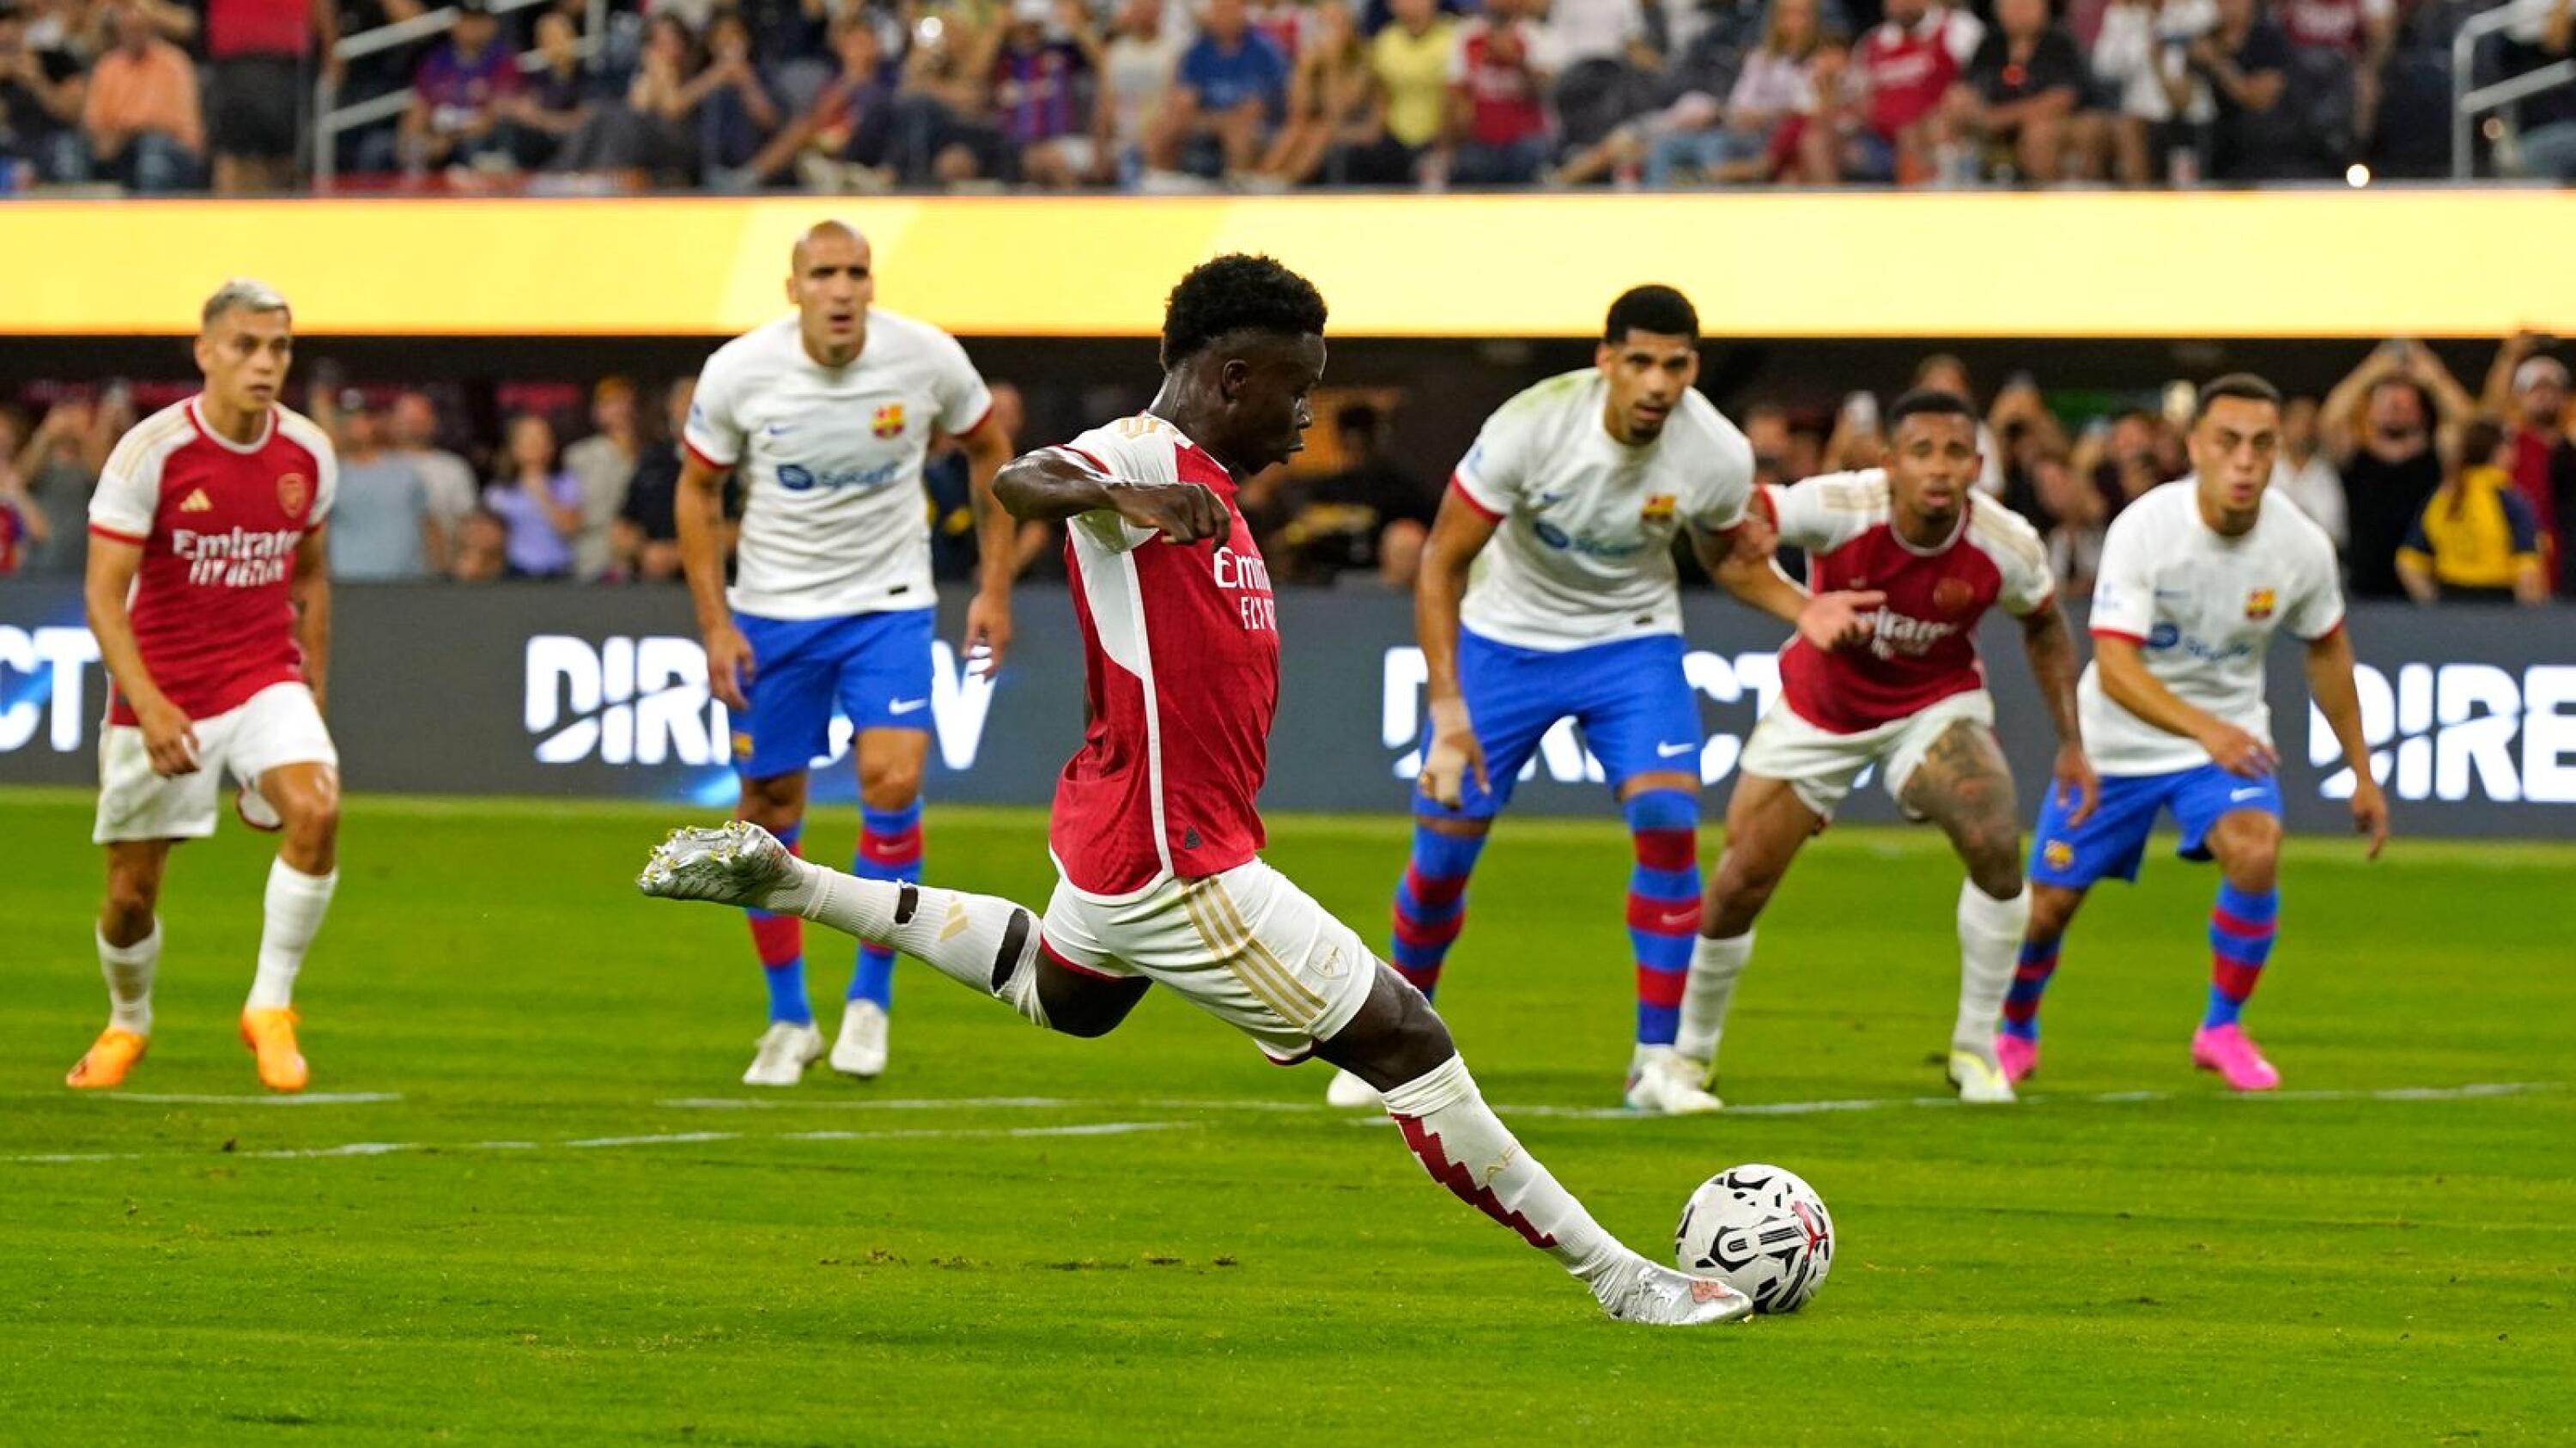 Bukayo Saka of Arsenal takes a penalty shot against Barcelona during the first half of their pre-season friendlyat SoFi Stadium